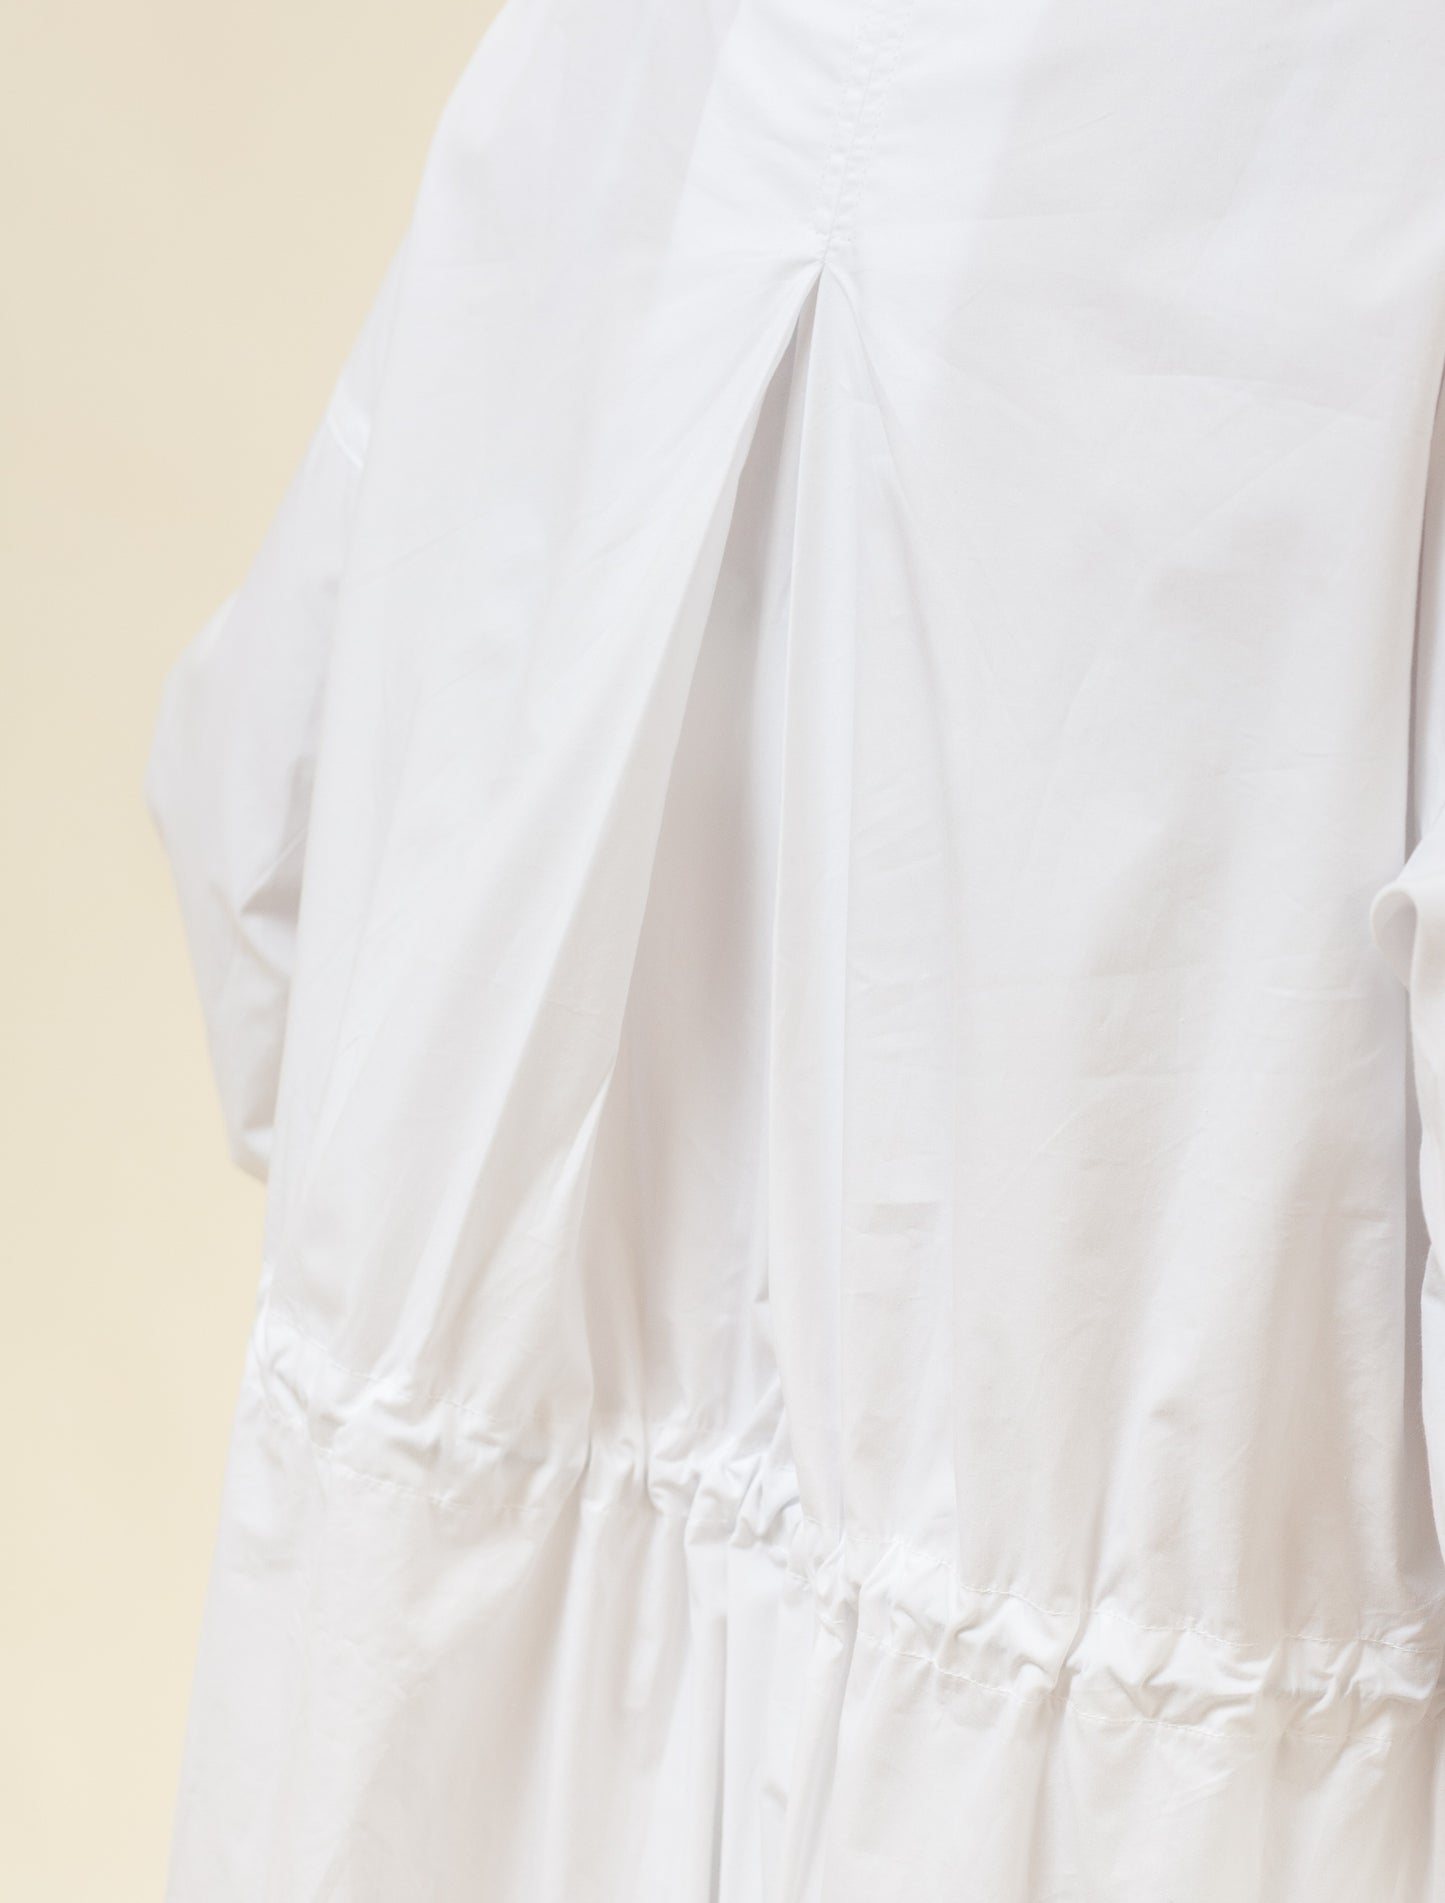 Asia Dress Cotton Poplin (White)